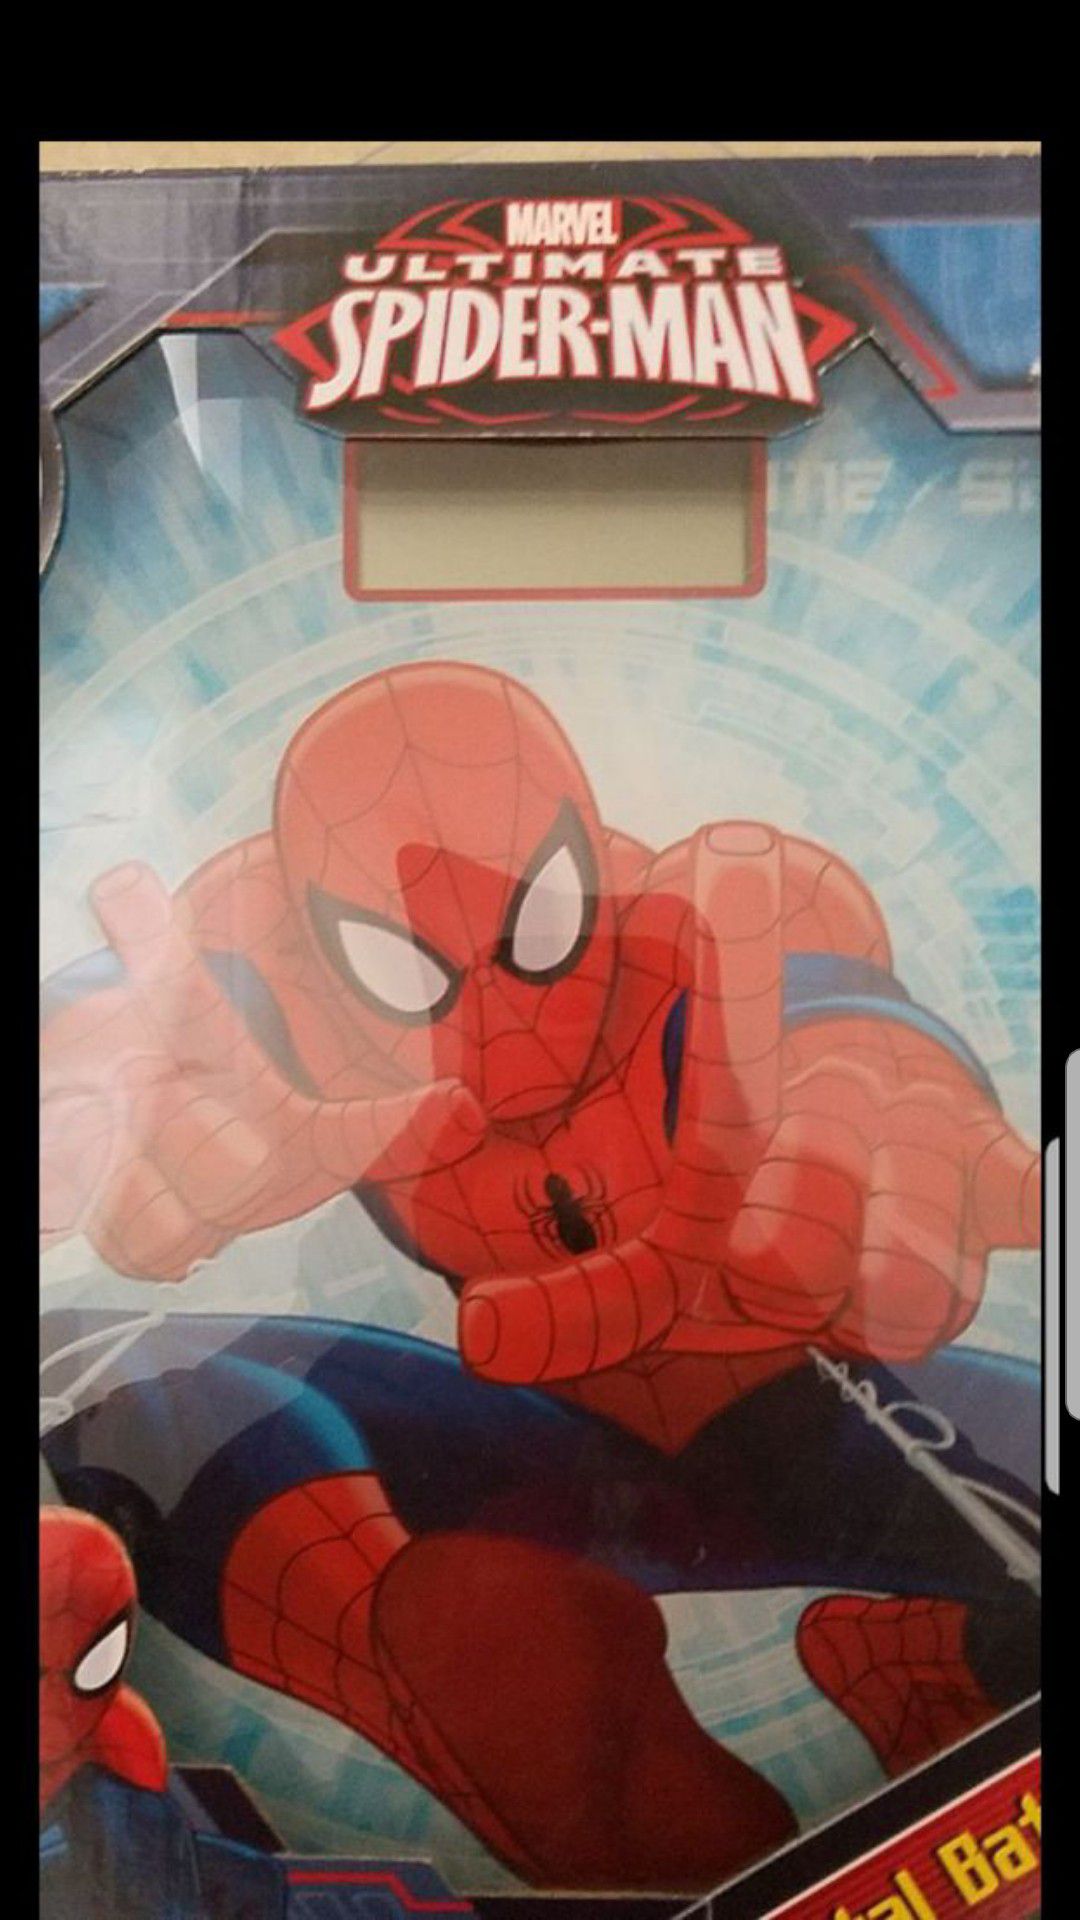 New LCD Spiderman digital bathroom scale